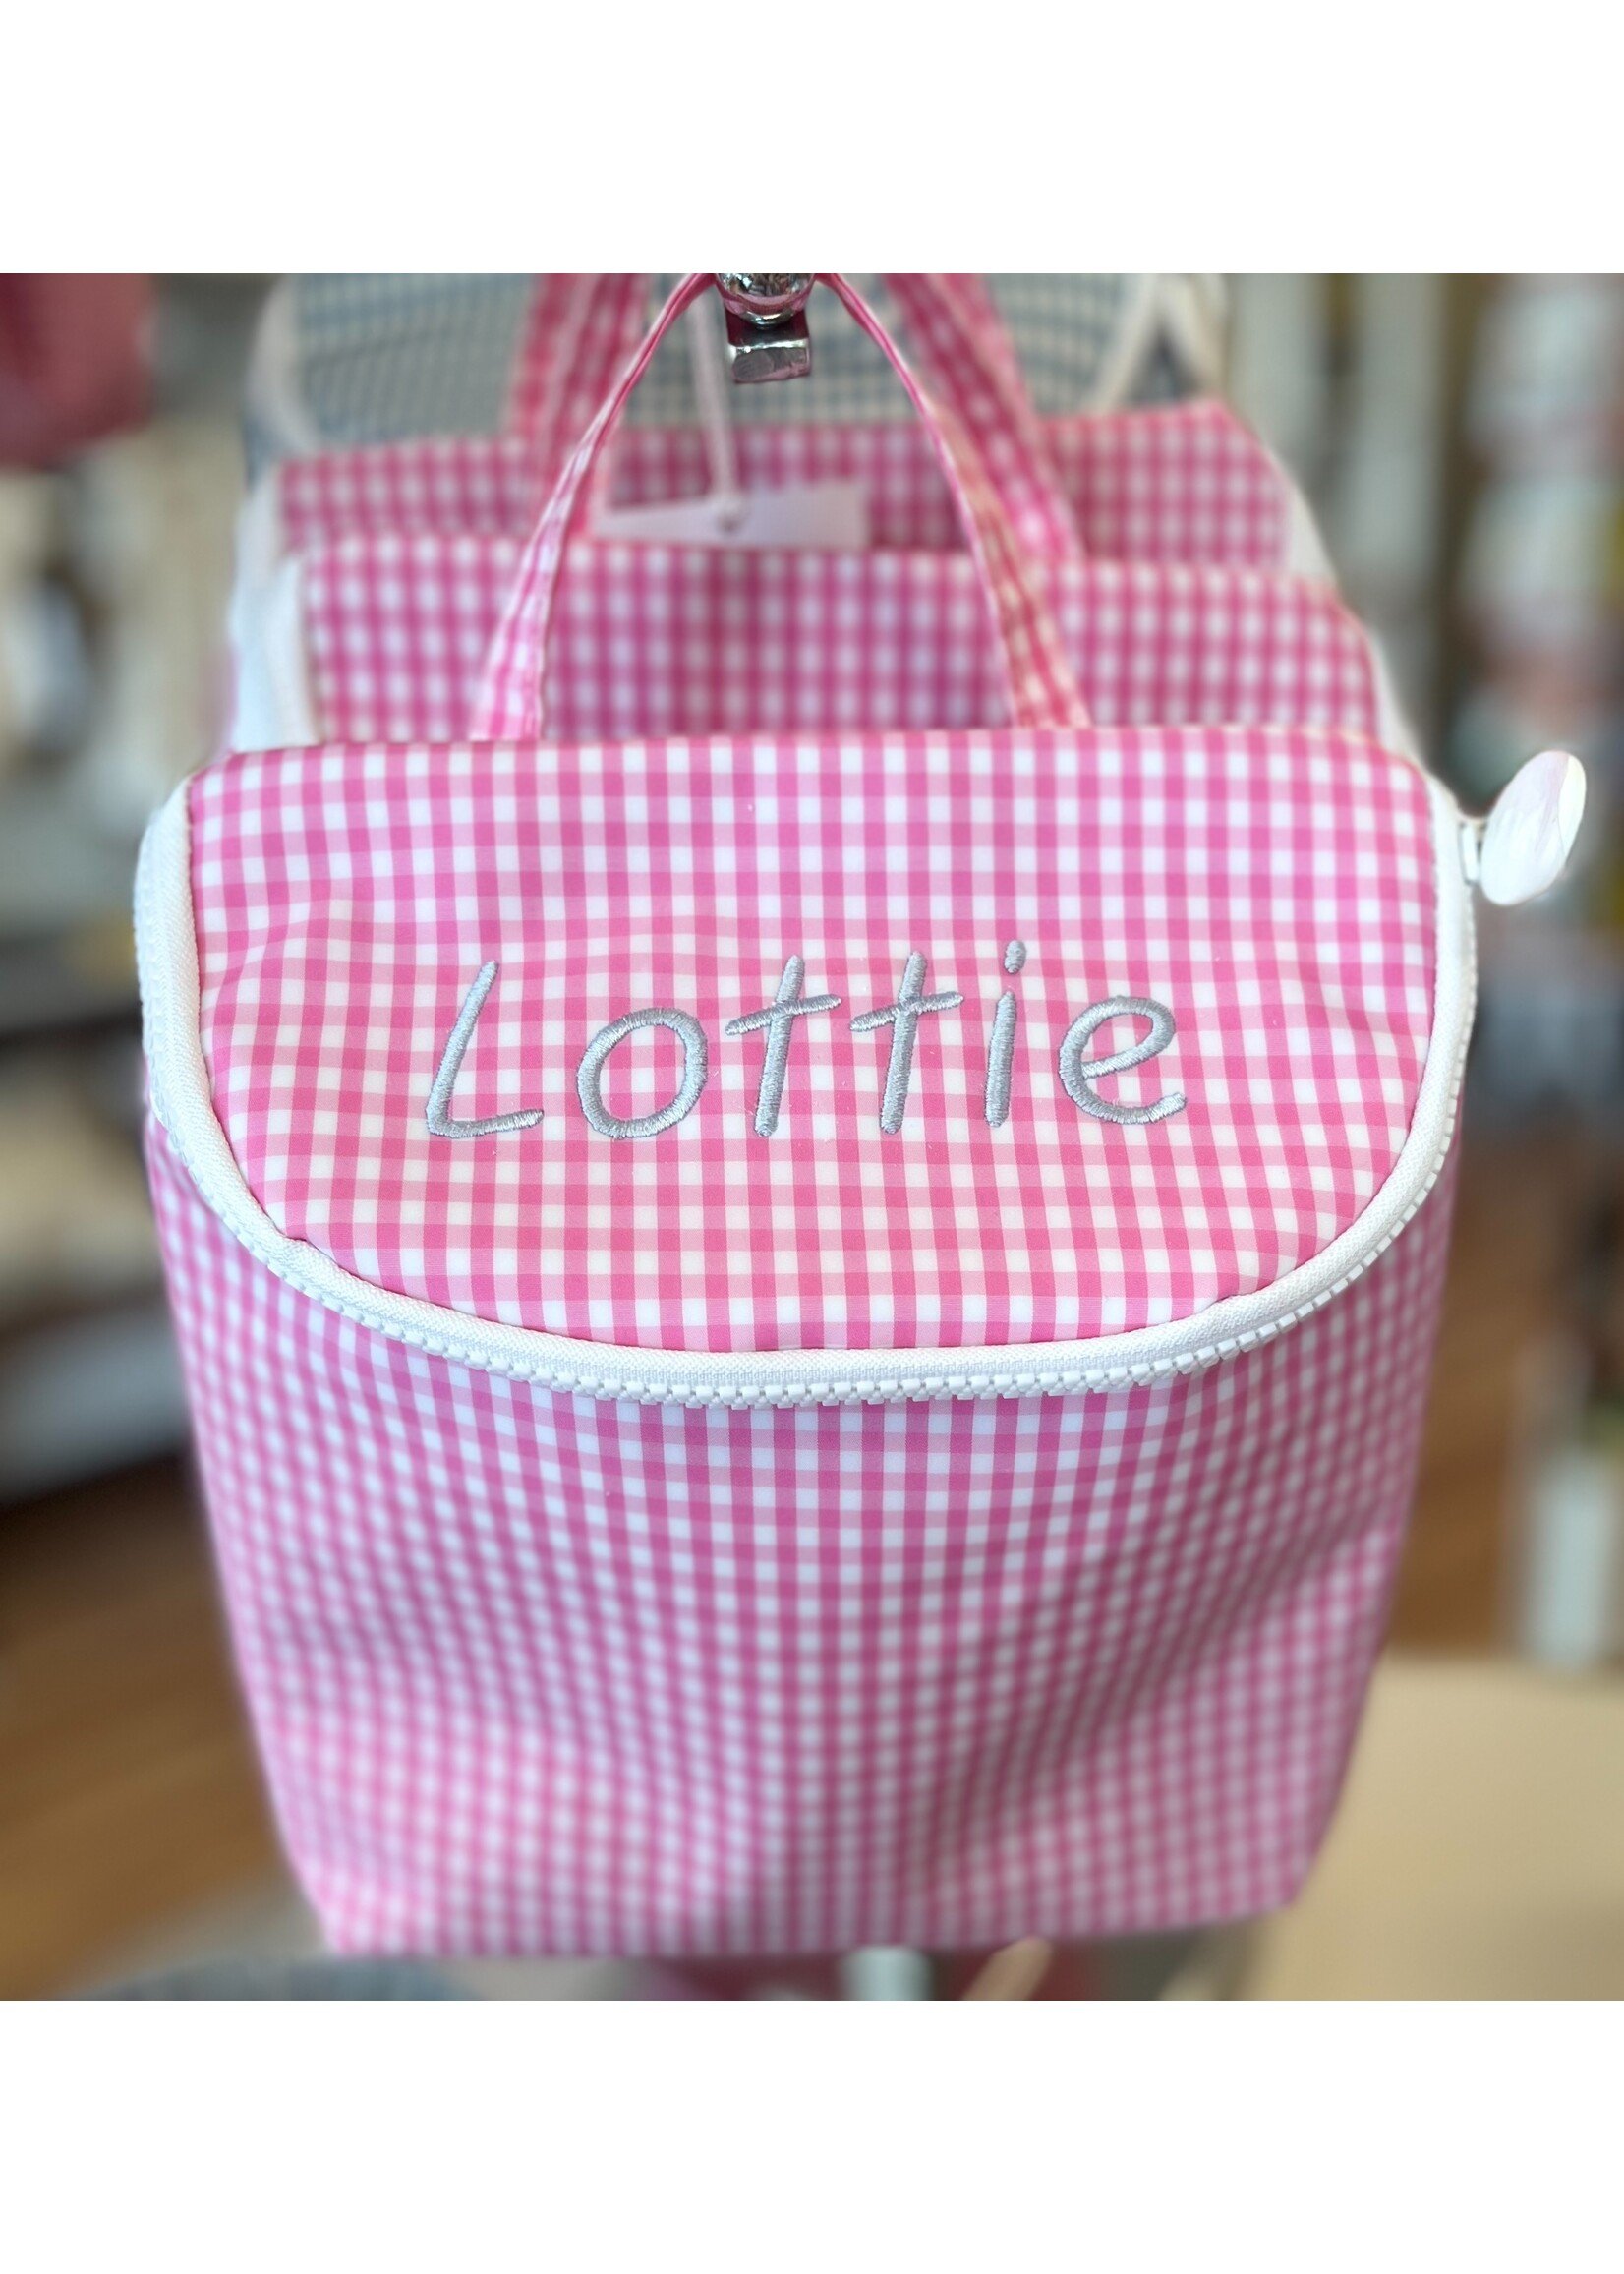 TRVL DESIGN Take Away Insulated Bag - Gingham Pink